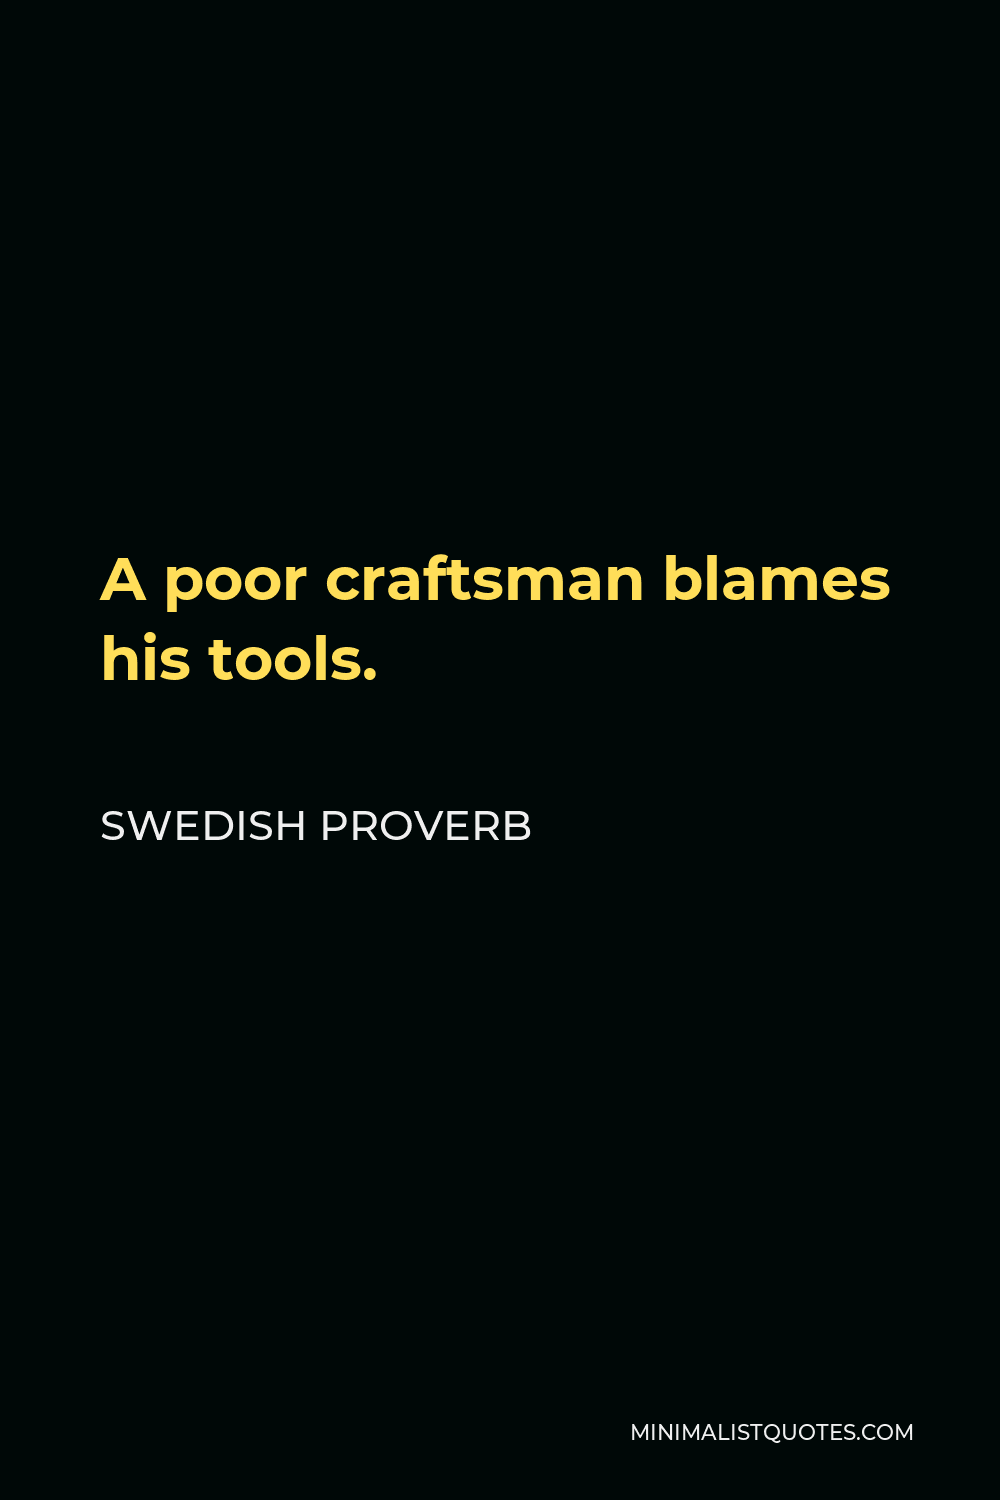 Swedish Proverb Quote - A poor craftsman blames his tools.